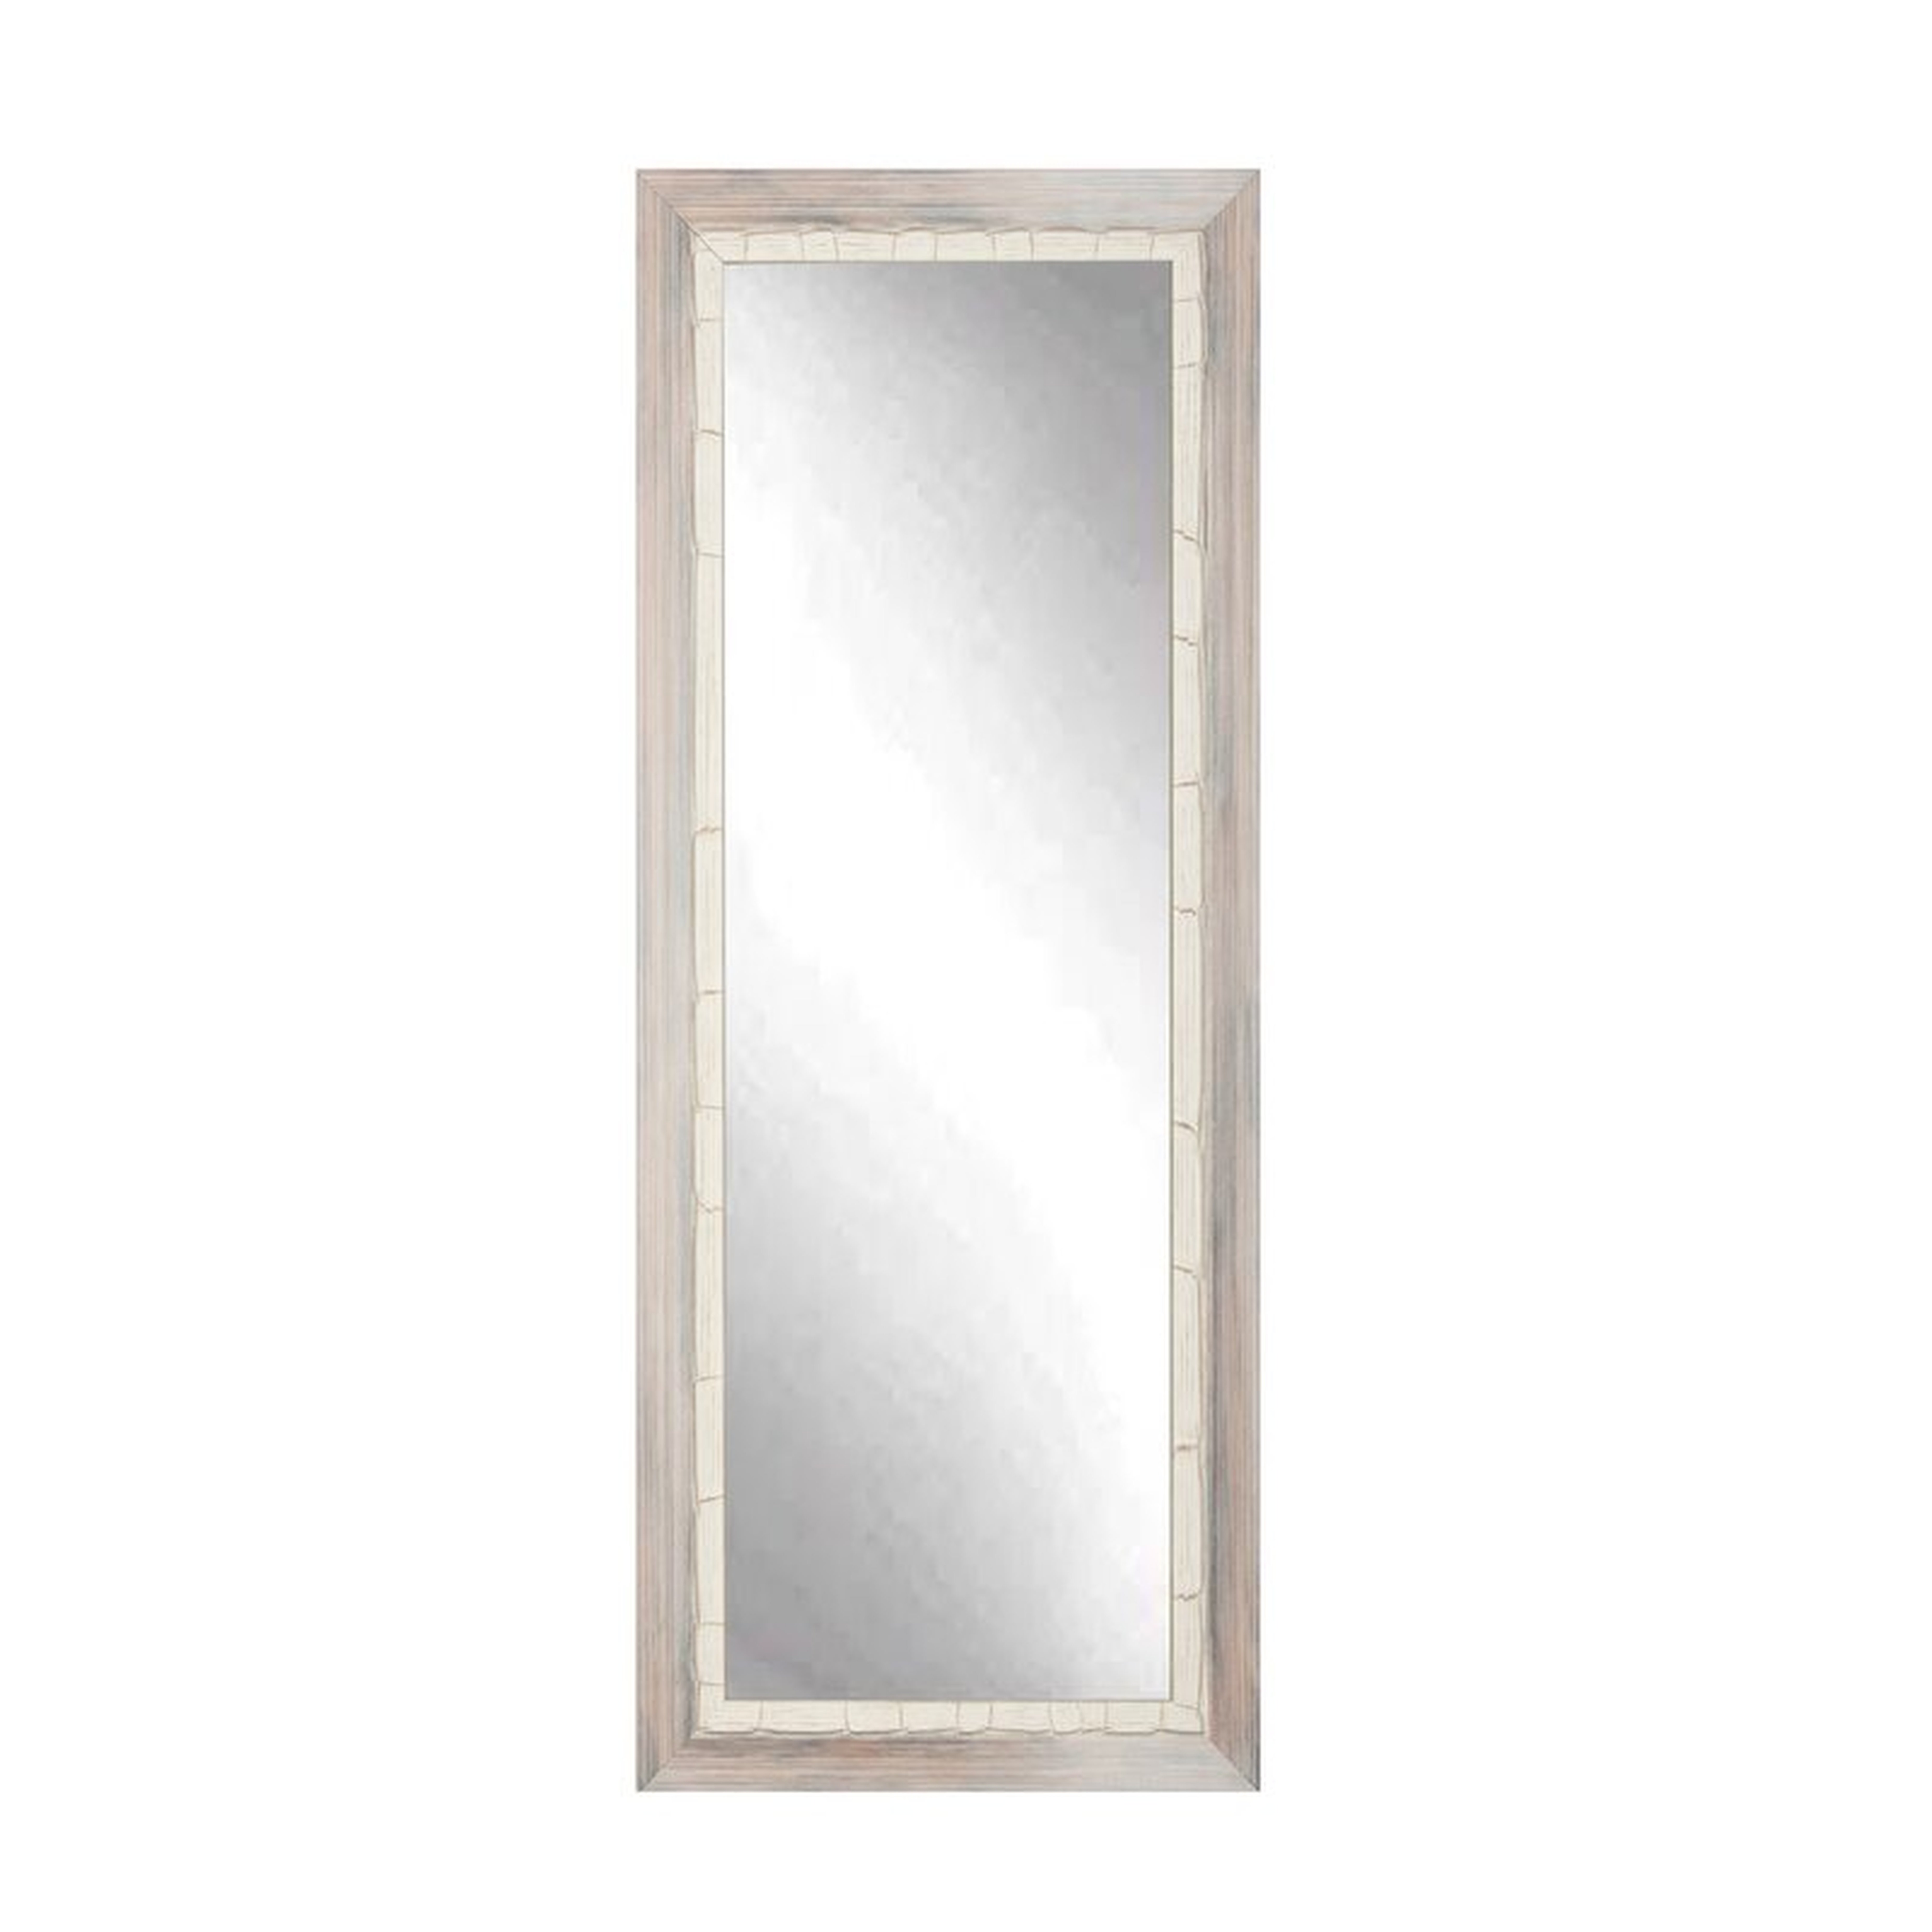 Matsumoto Weathered Distressed Full Length Wall Mirror - Wayfair